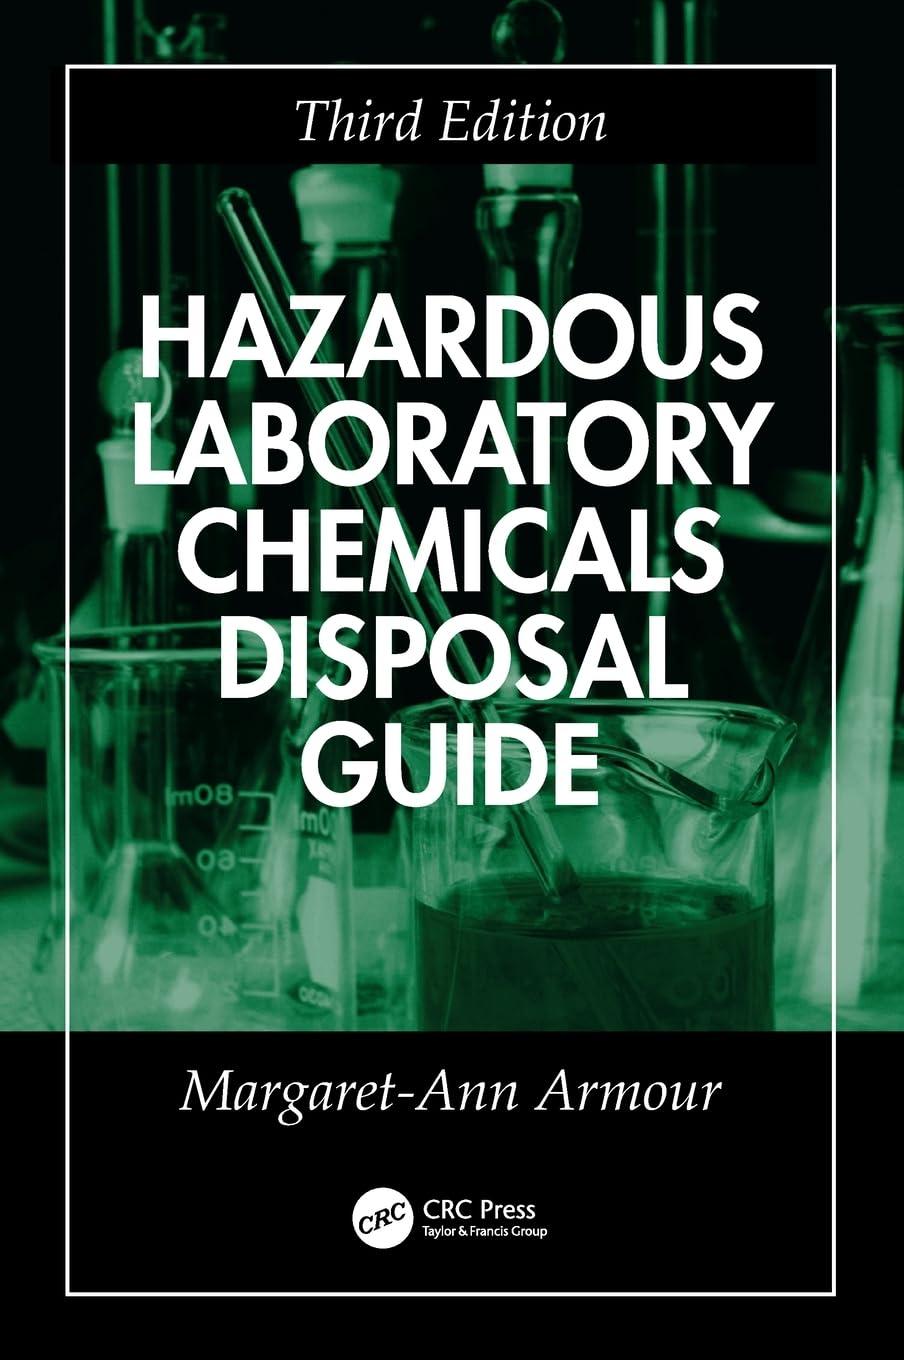 hazardous laboratory chemicals disposal guide 3rd edition margaret-ann armour 1138474363, 978-1138474369